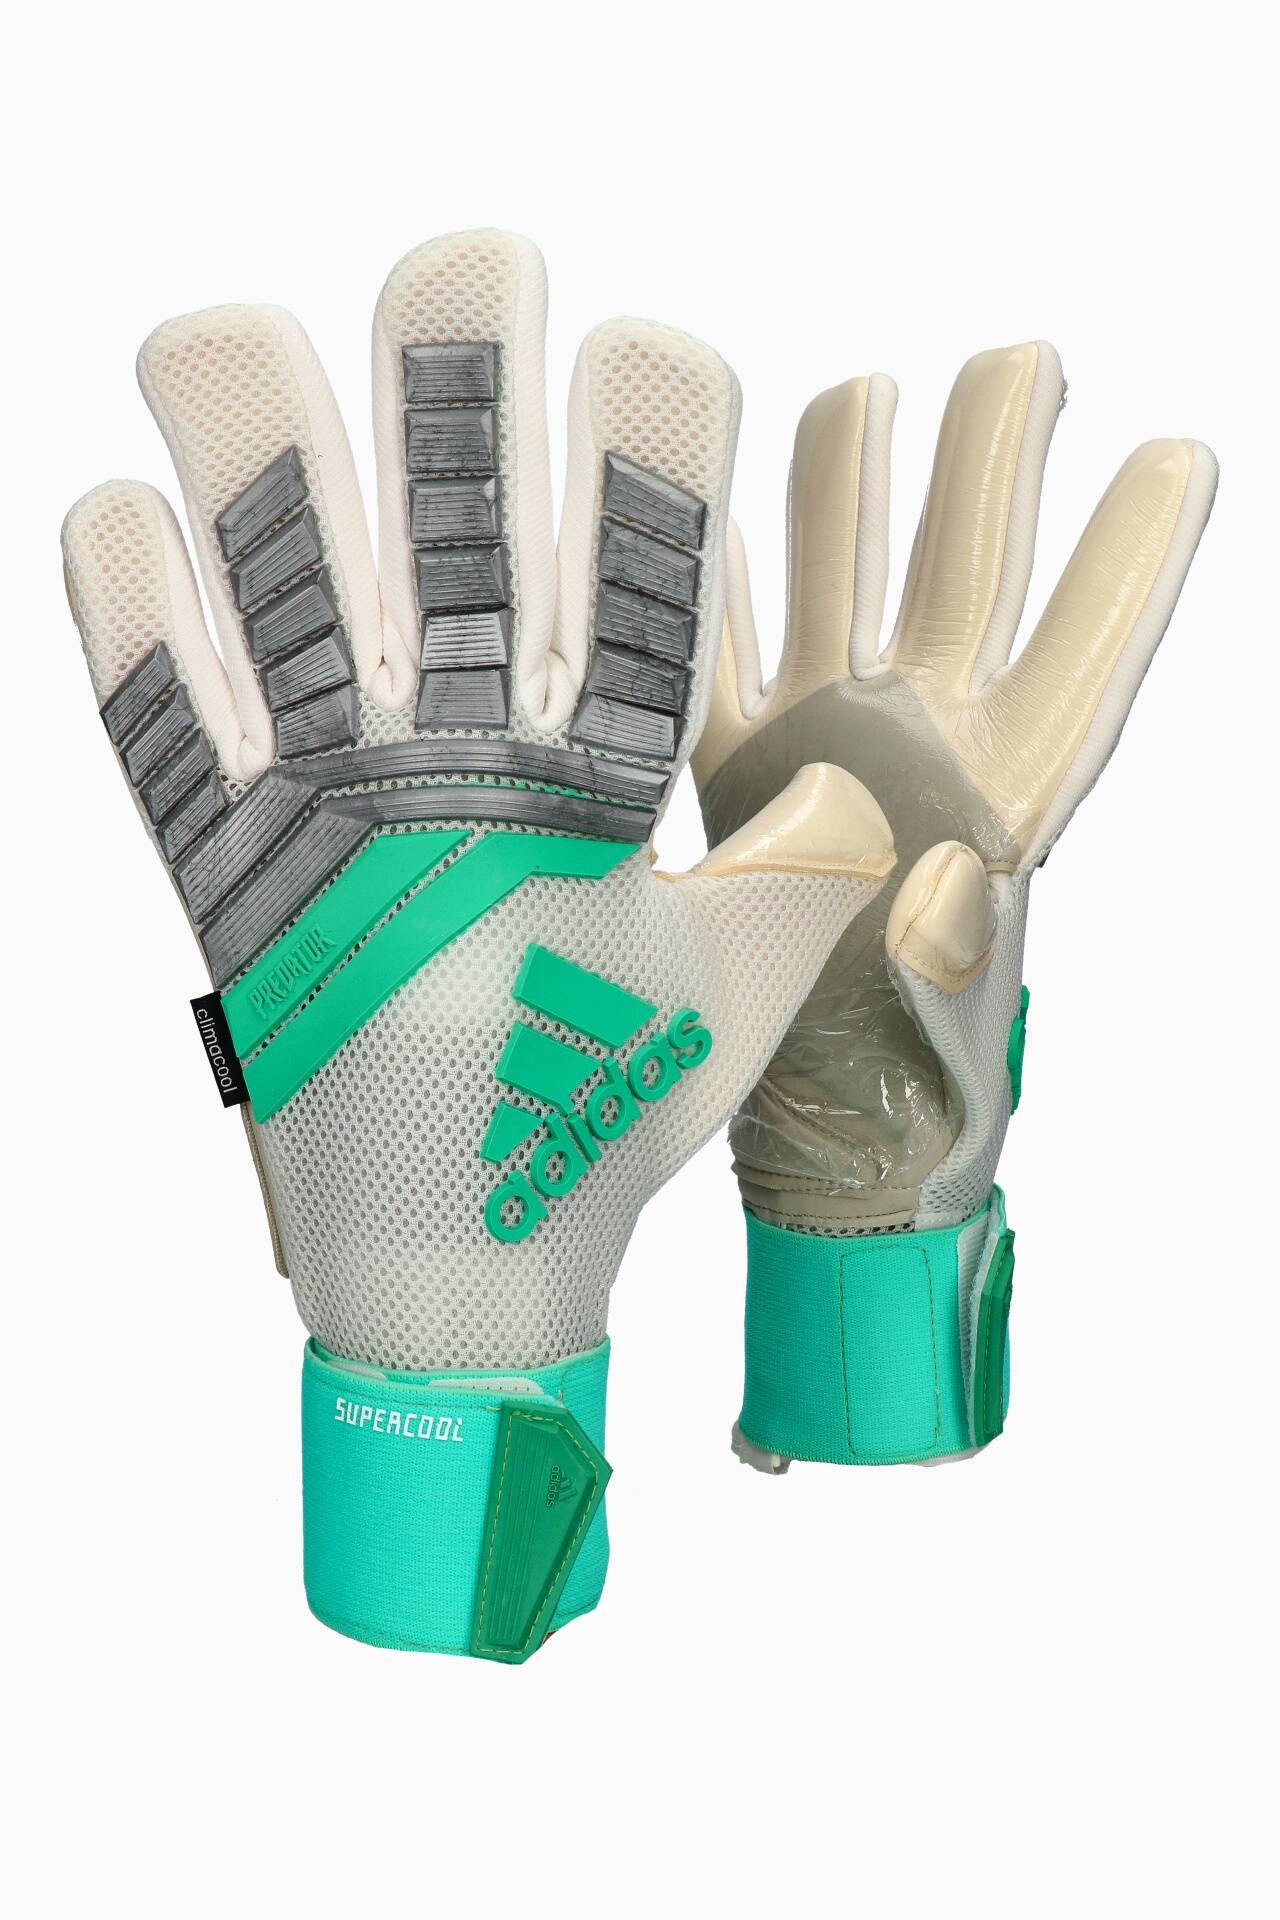 Goalkeeper gloves adidas Predator Super Cool | R-GOL.com - boots & equipment